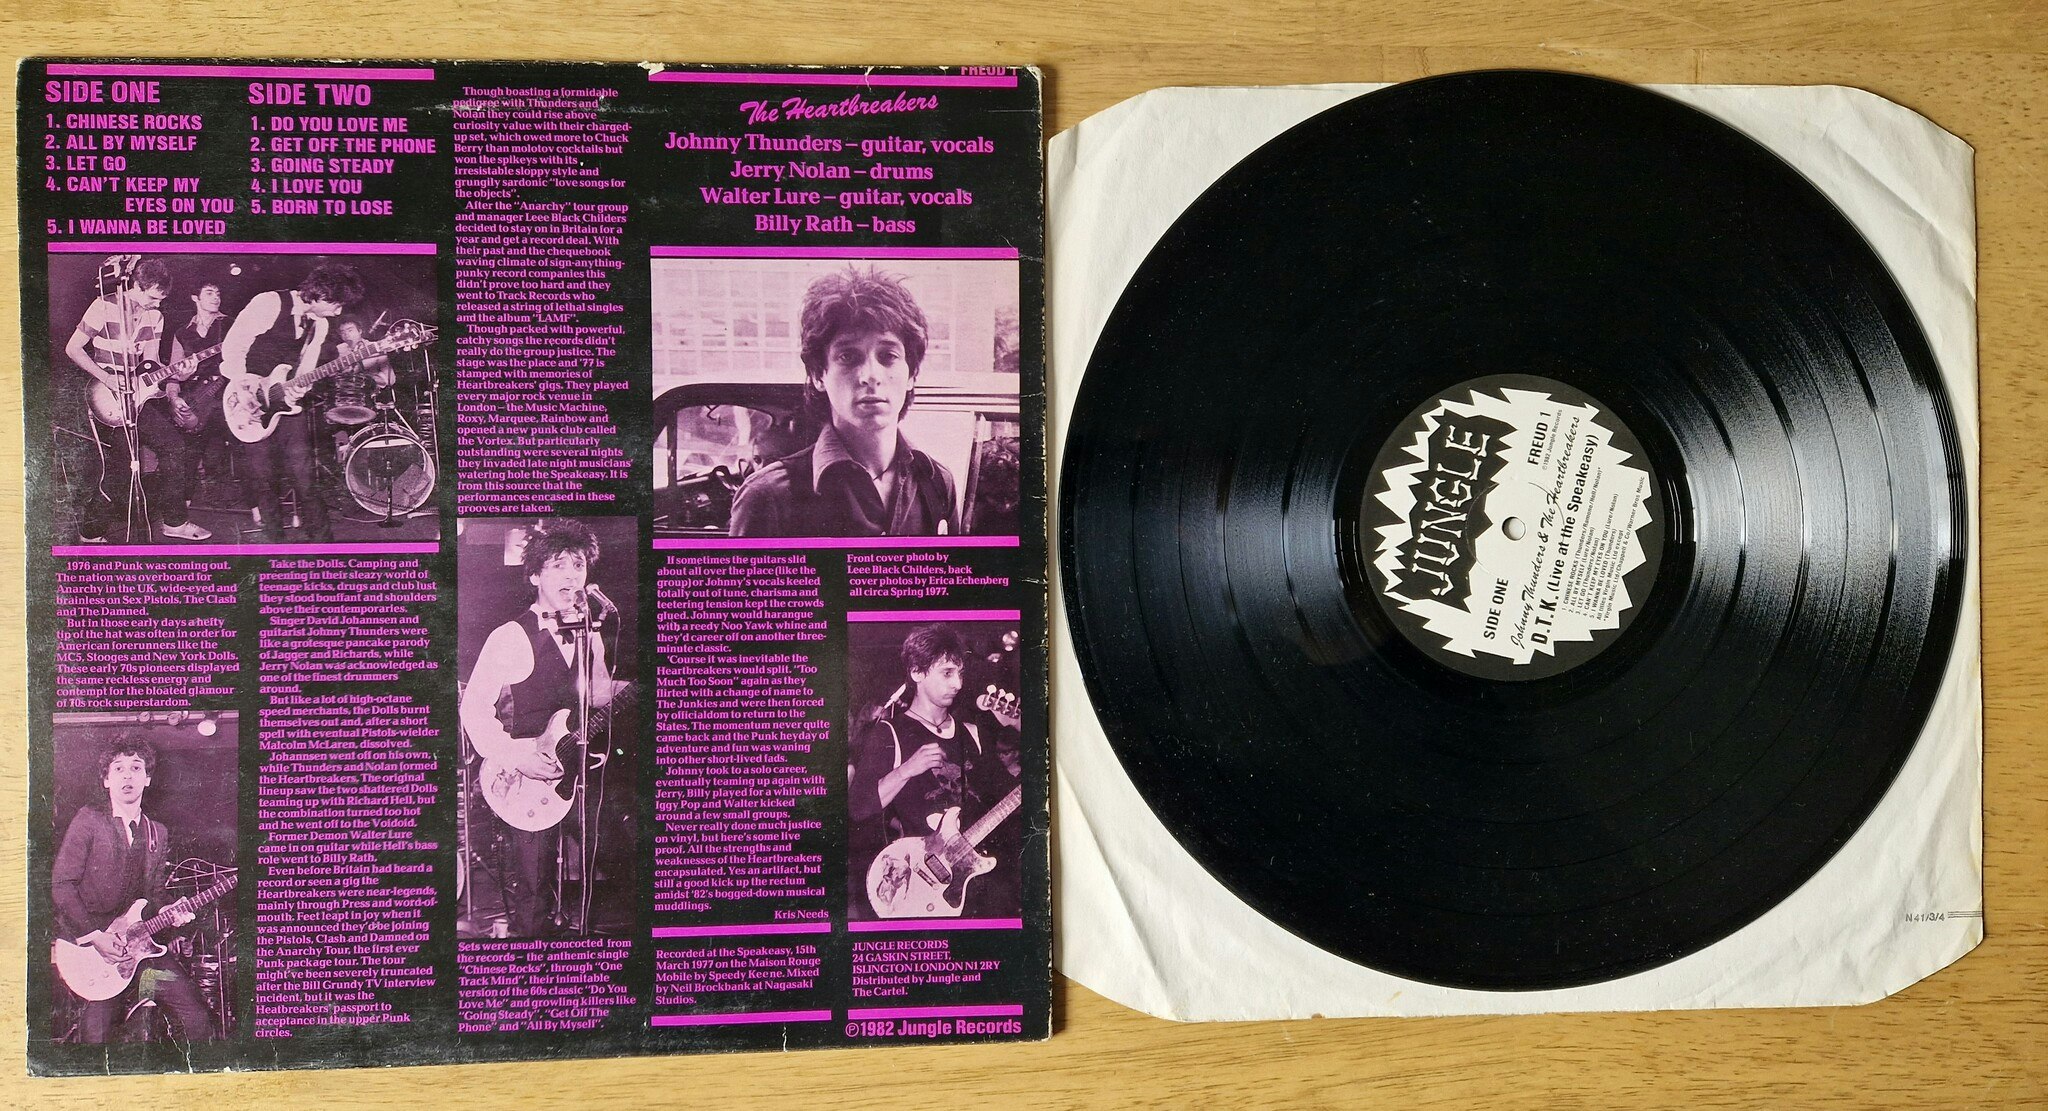 Johnny Thunders & the Heartbreakers, D.T.K. Live at the speakeasy. Vinyl LP